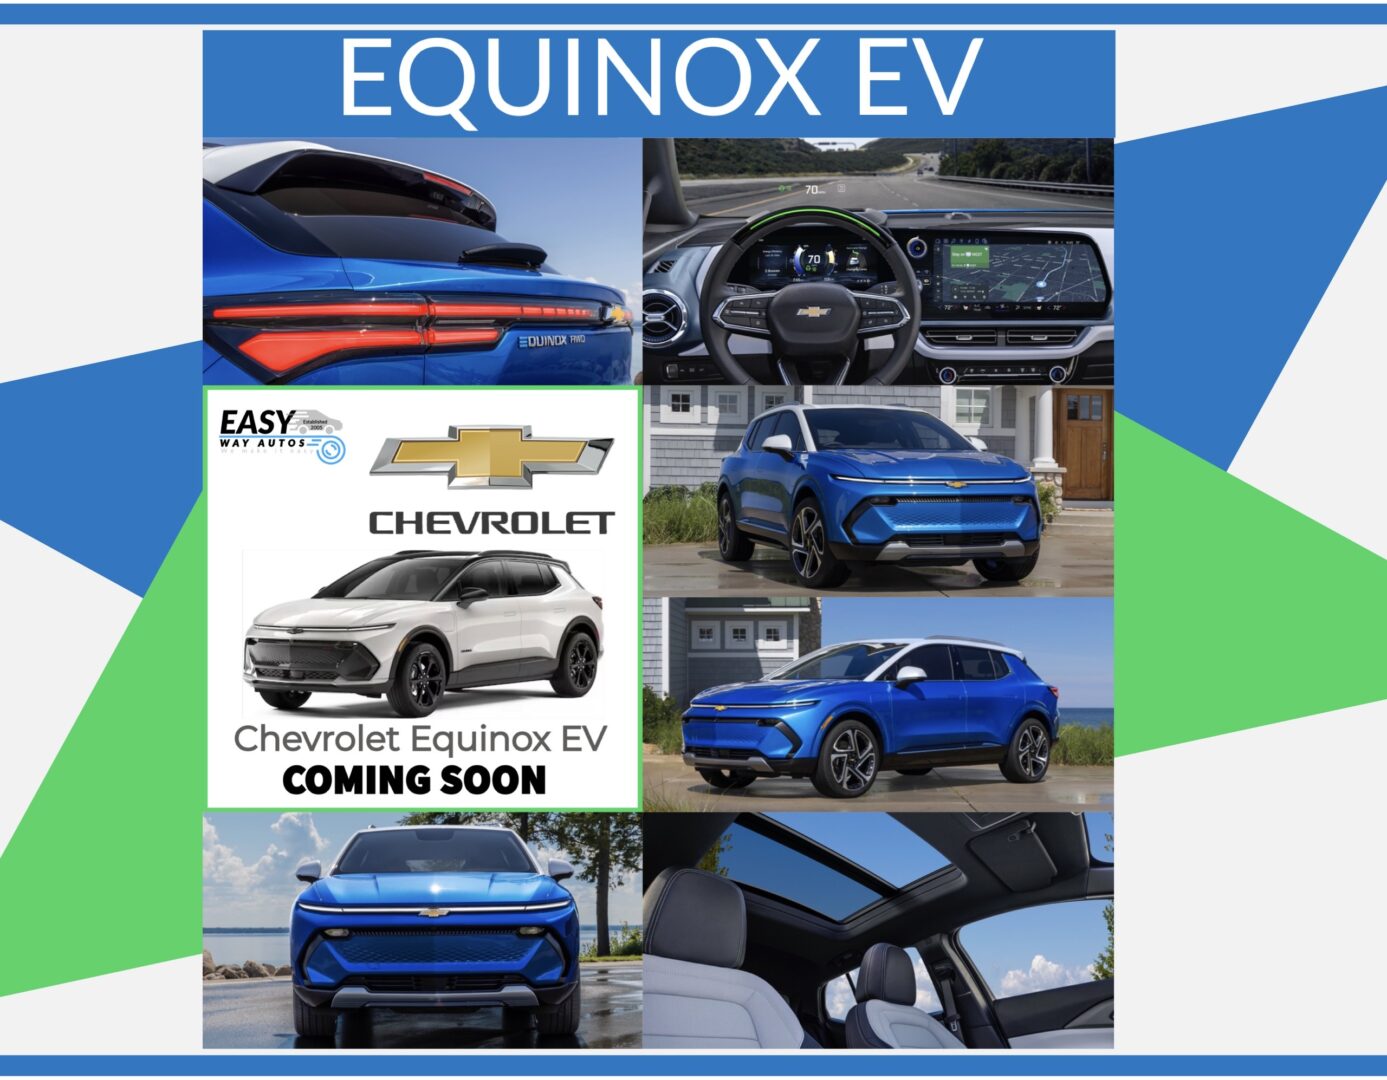 Chevrolet equinox ev coming soon.